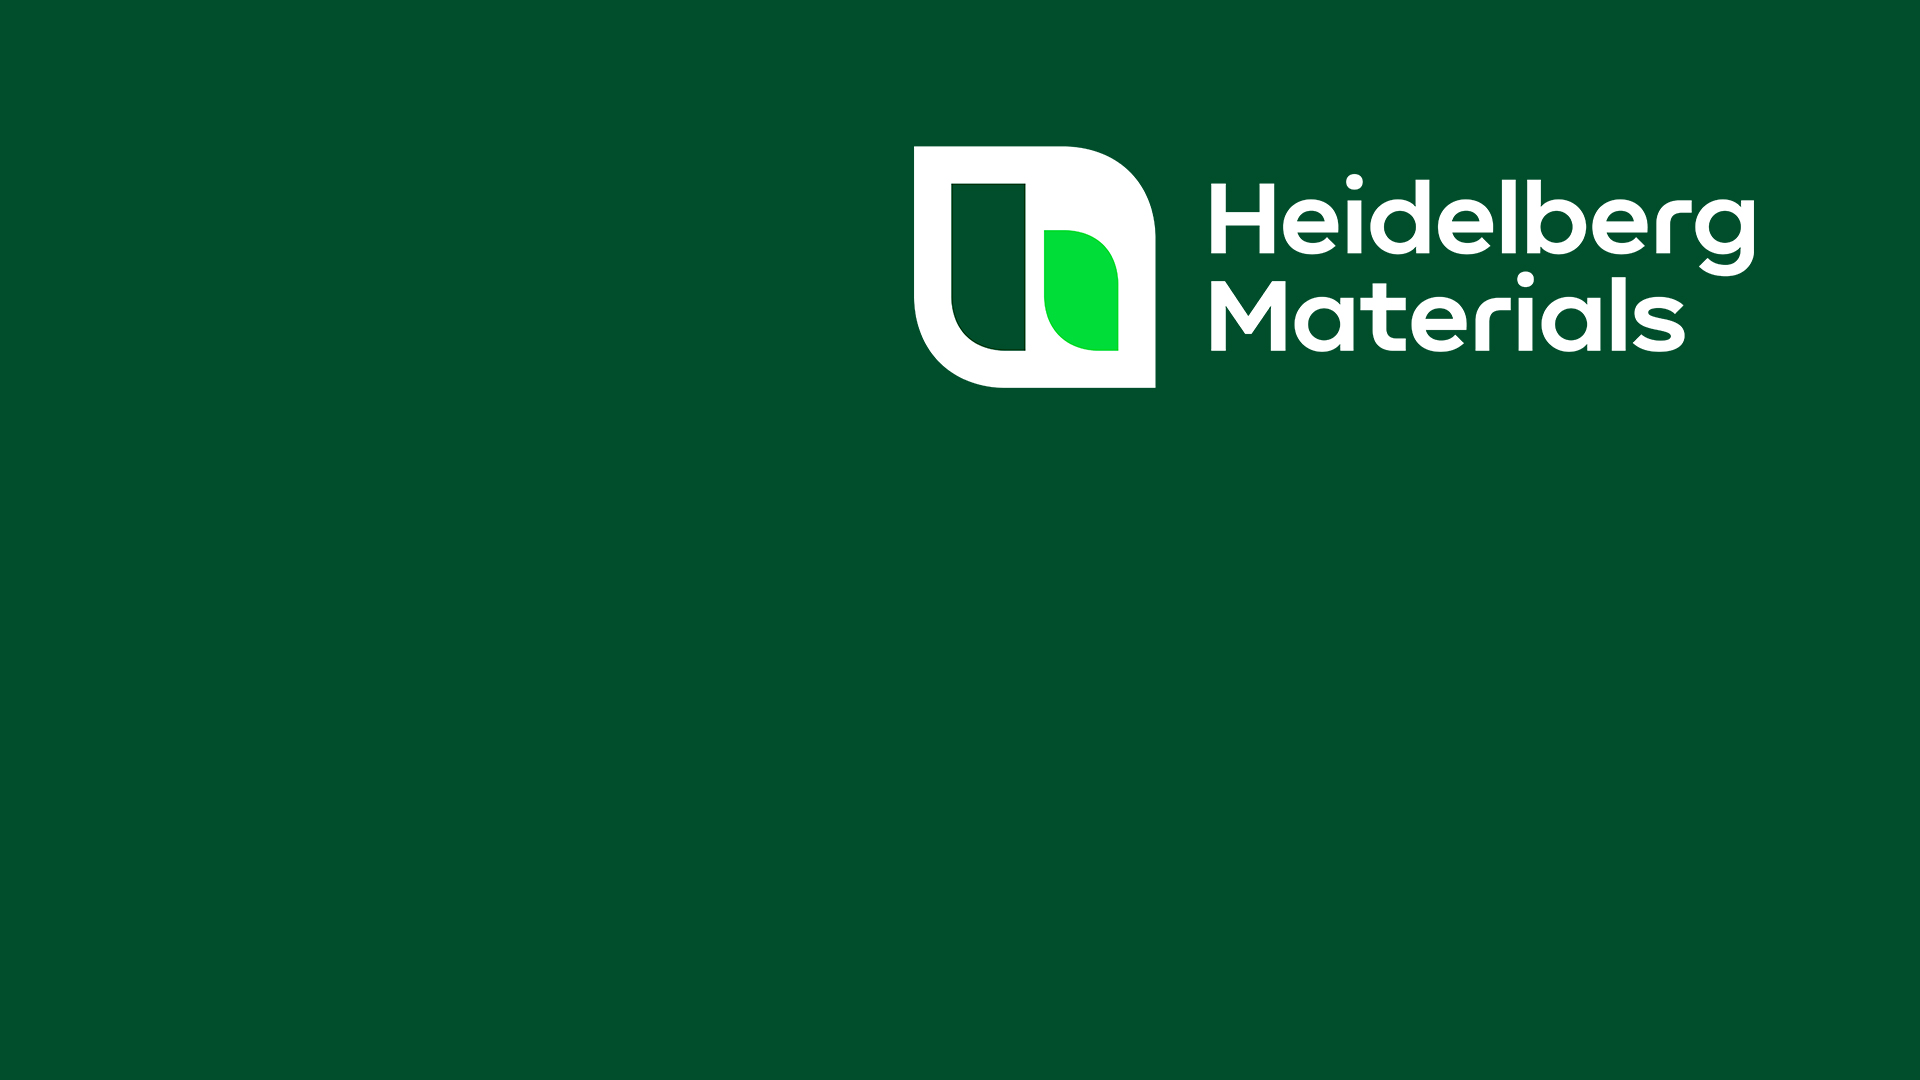 Heidelberg Materials OnSite app